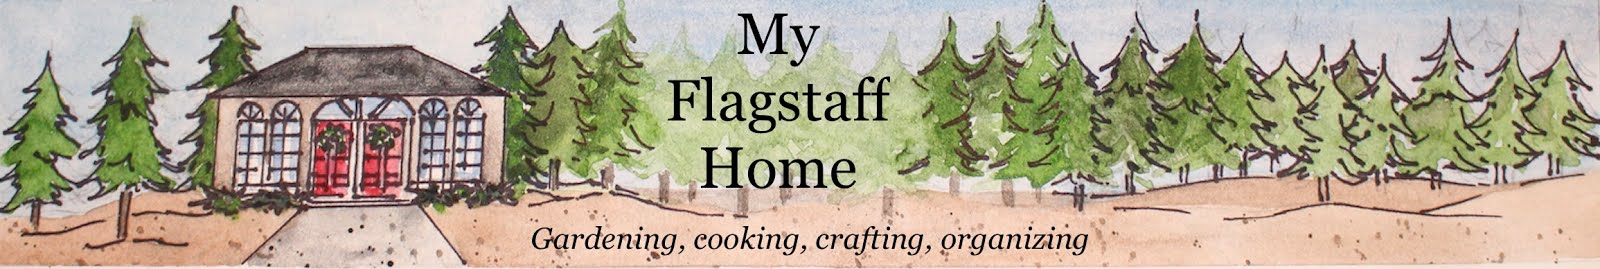 My Flagstaff Home